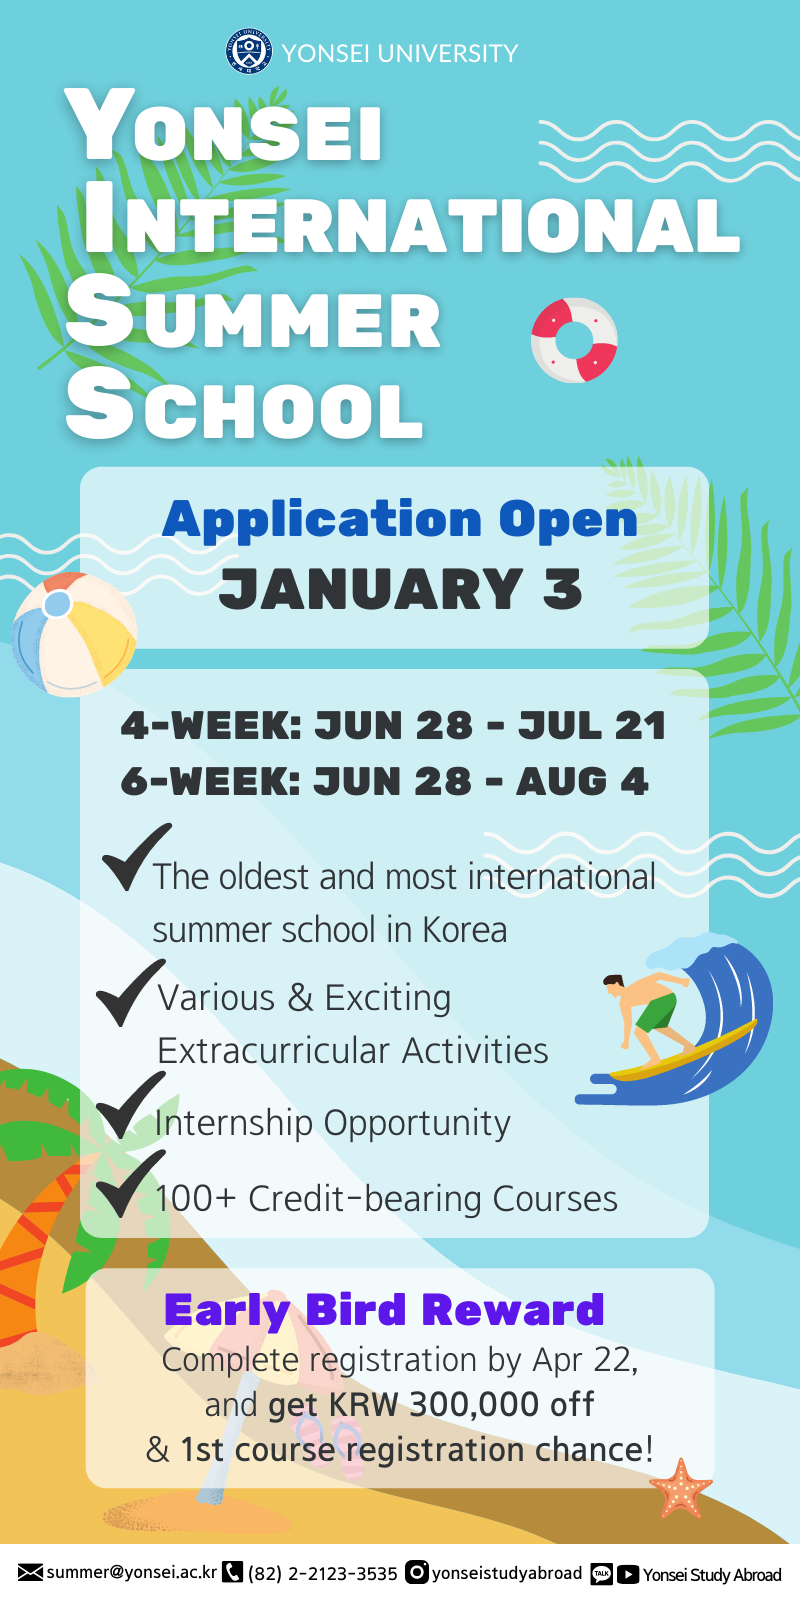 [Yonsei University] 2022 Yonsei International Summer School is open for application!